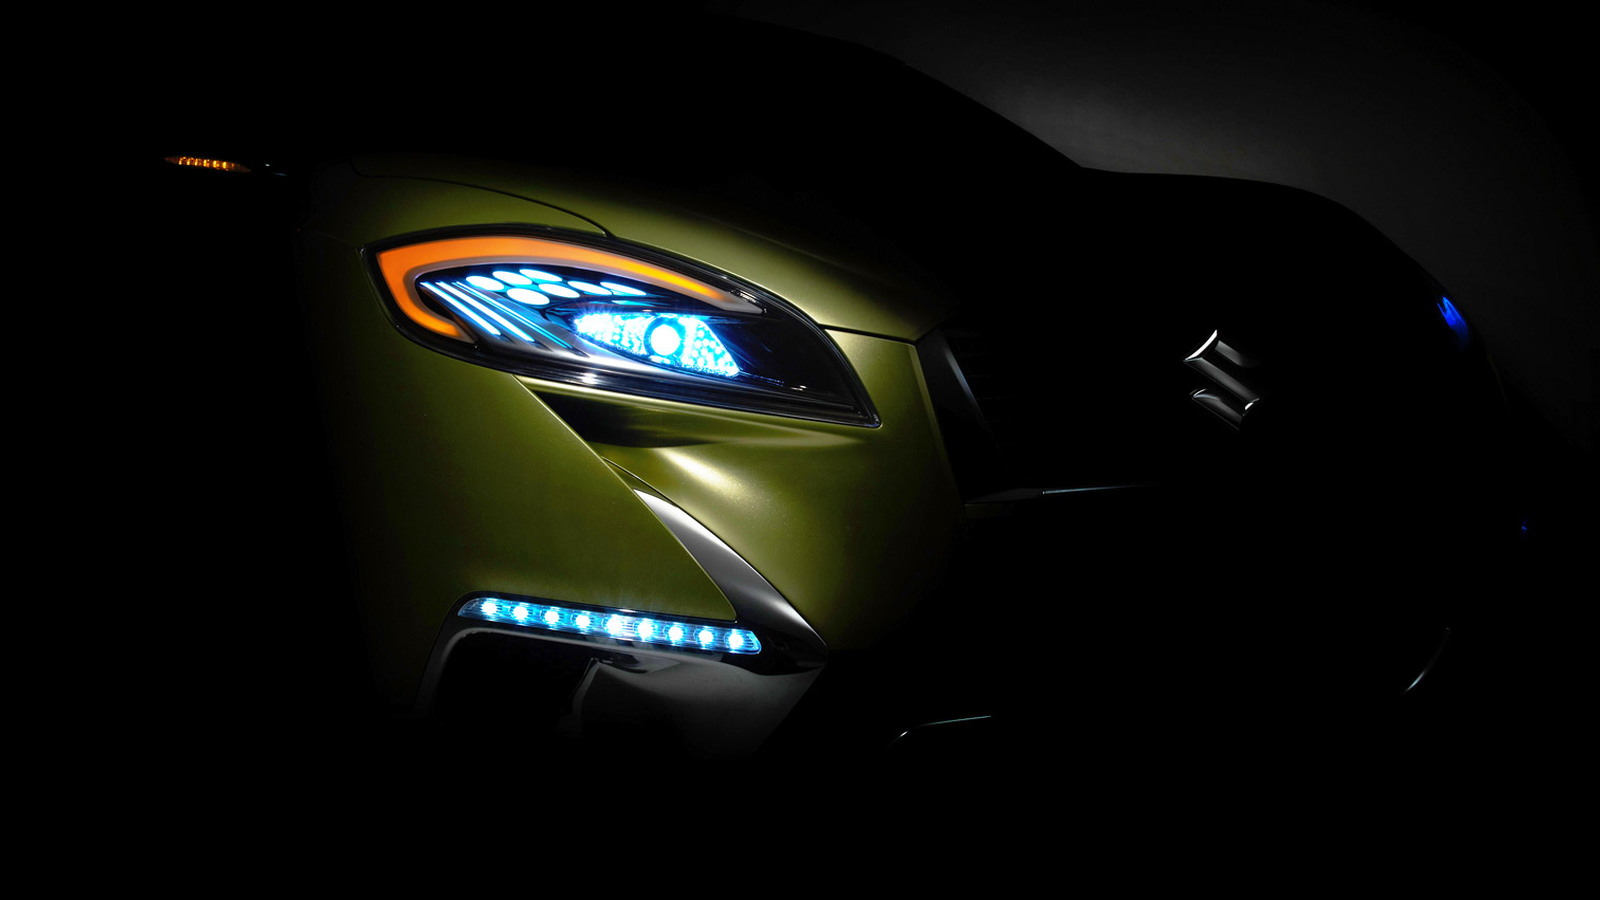 Suzuki S-Cross concept teased ahead of 2012 Paris Auto Show